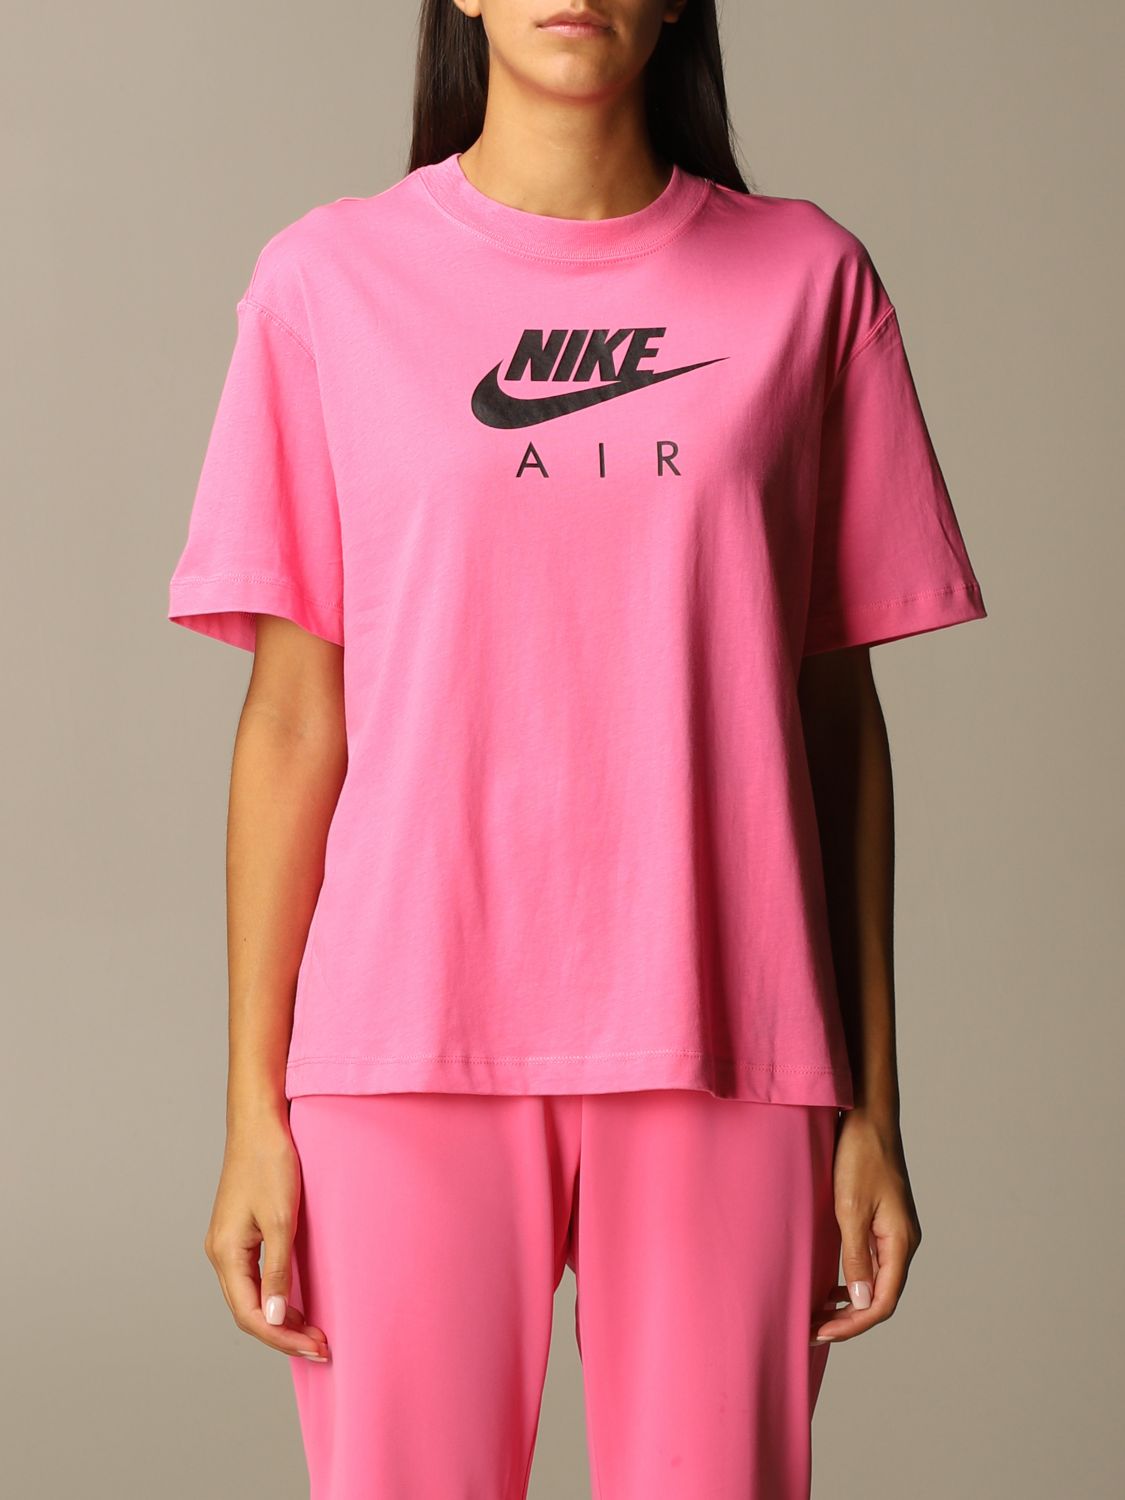 camiseta nike mujer rosa